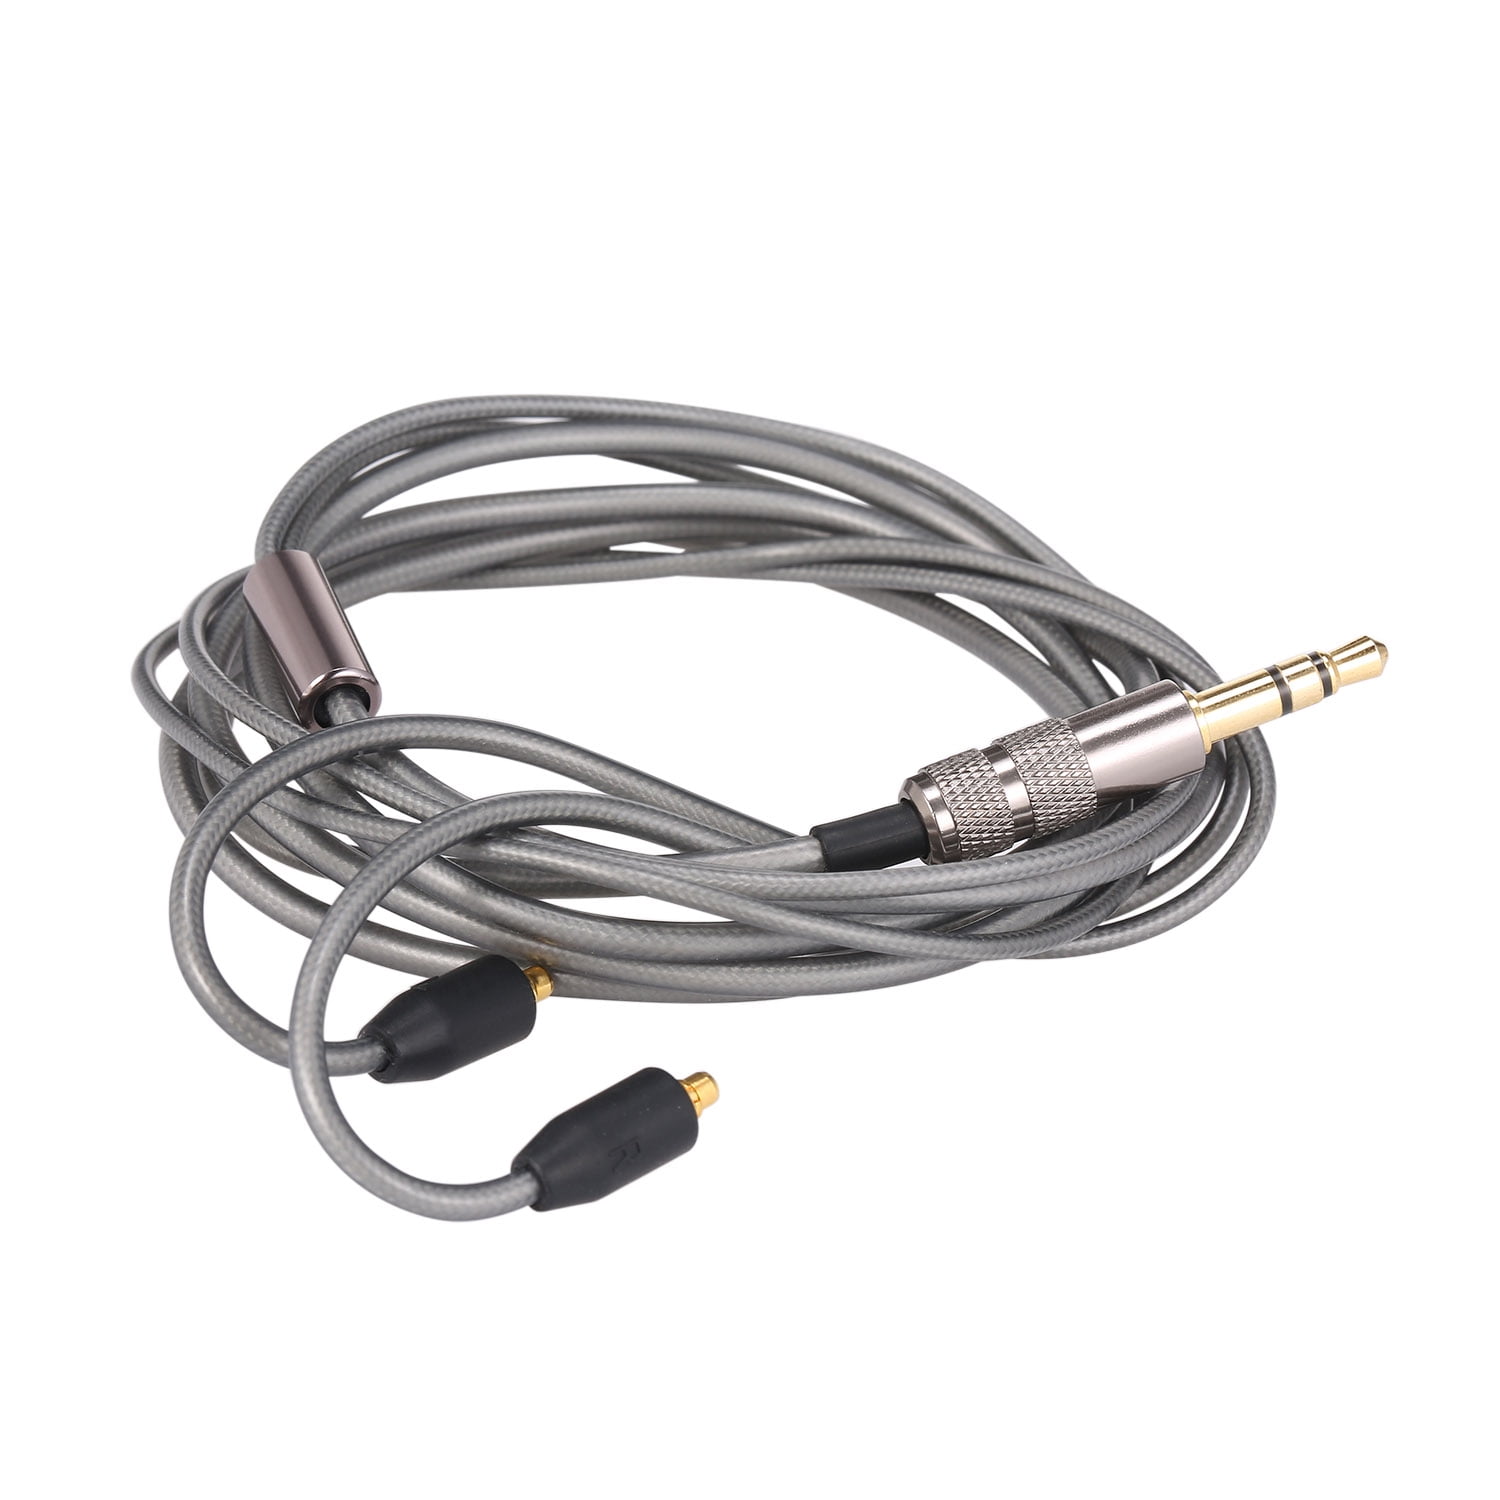 MMCX Cable For Shure SE215 SE315 SE535 SE846 Earphones Headphone Cables Cord